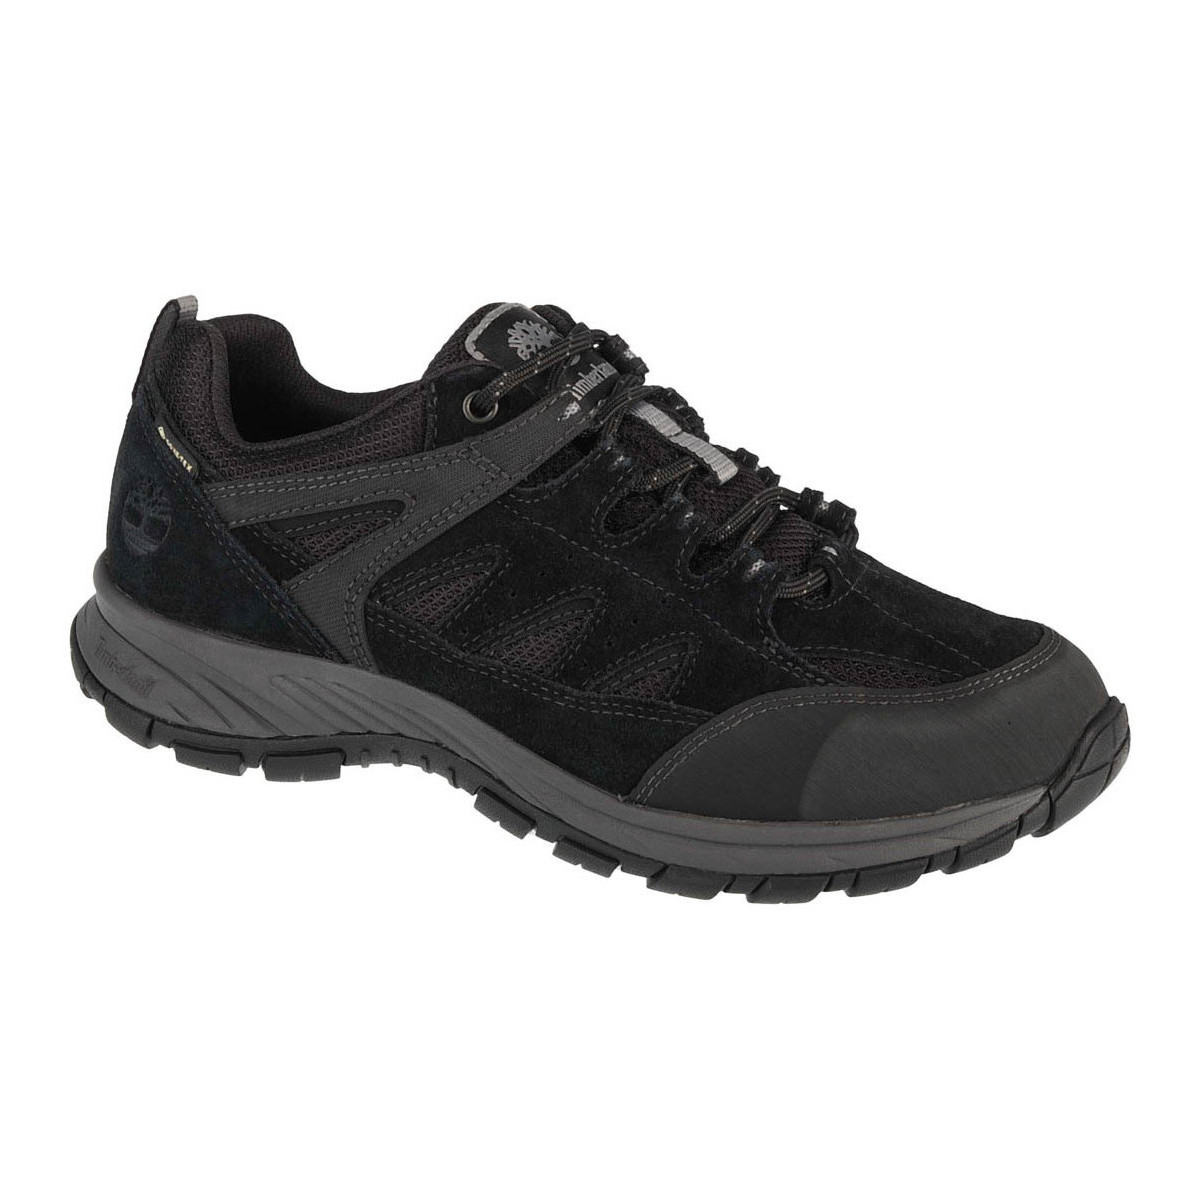 Topánky Muž Turistická obuv Timberland Sadler Pass GTX Čierna